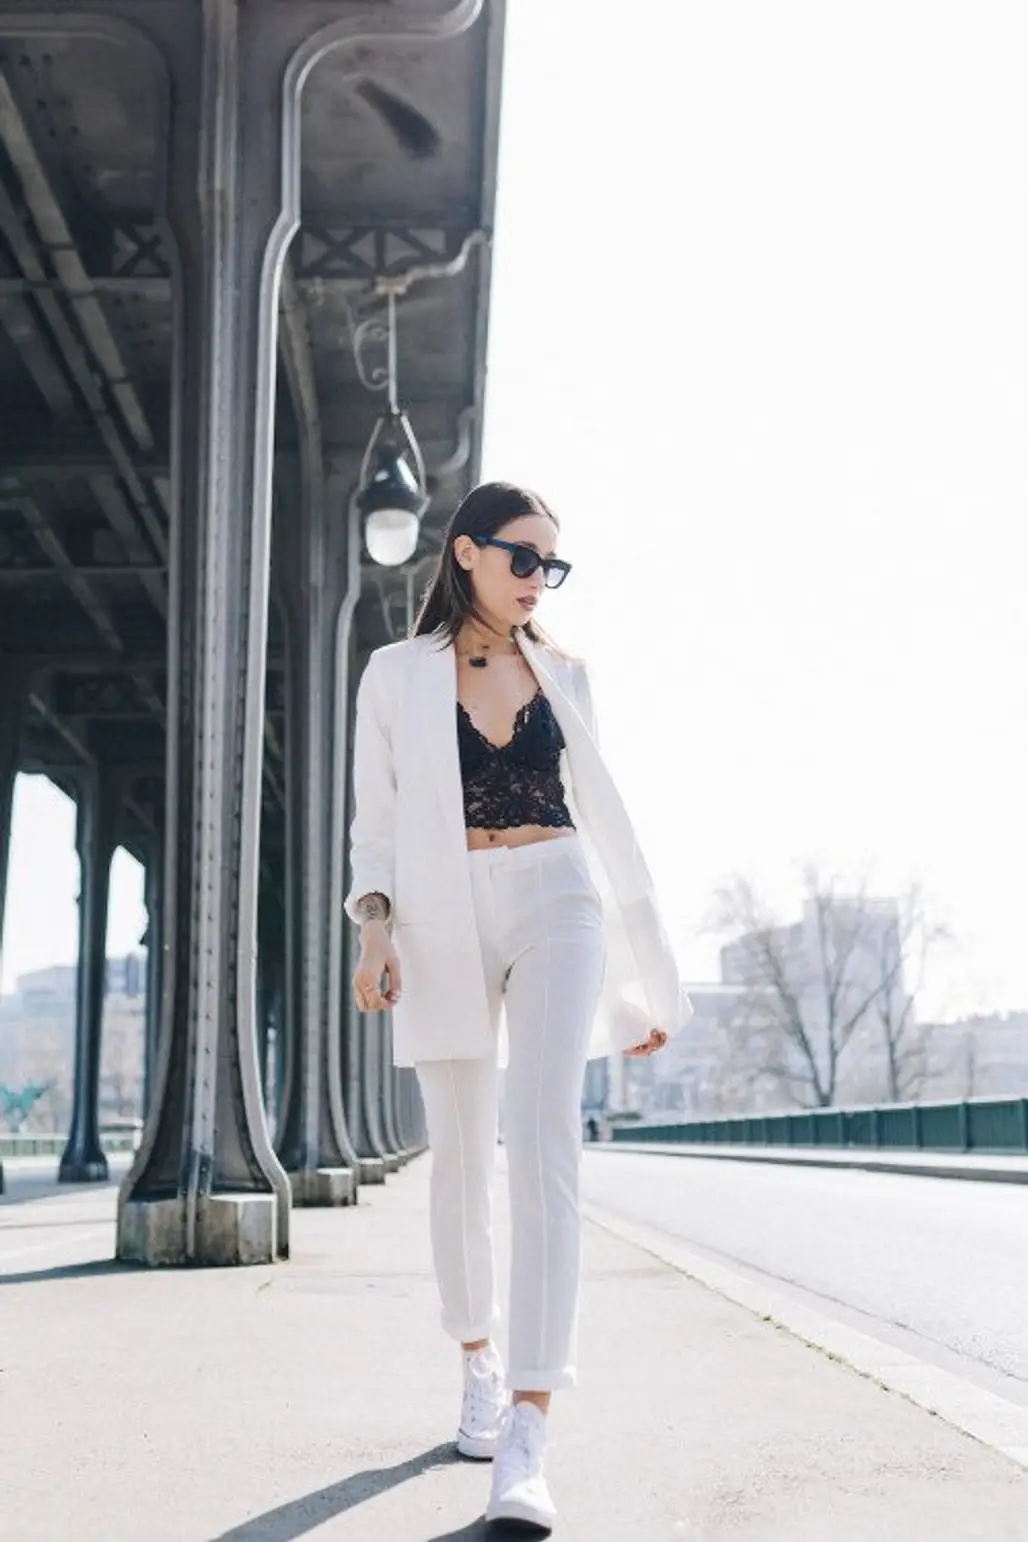 So Chic: Black Crop Top, White Blazer and White Pants